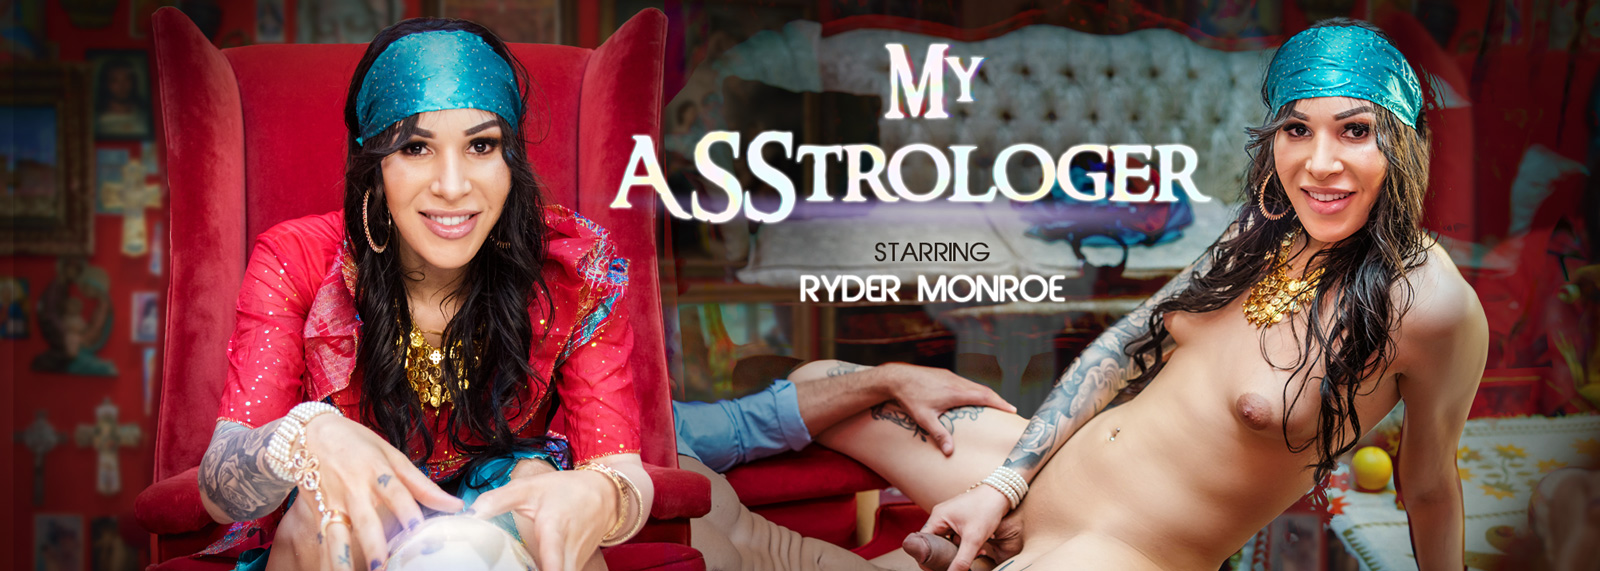 My ASStrologer - VR Porn Video, Starring Ryder Monroe VR